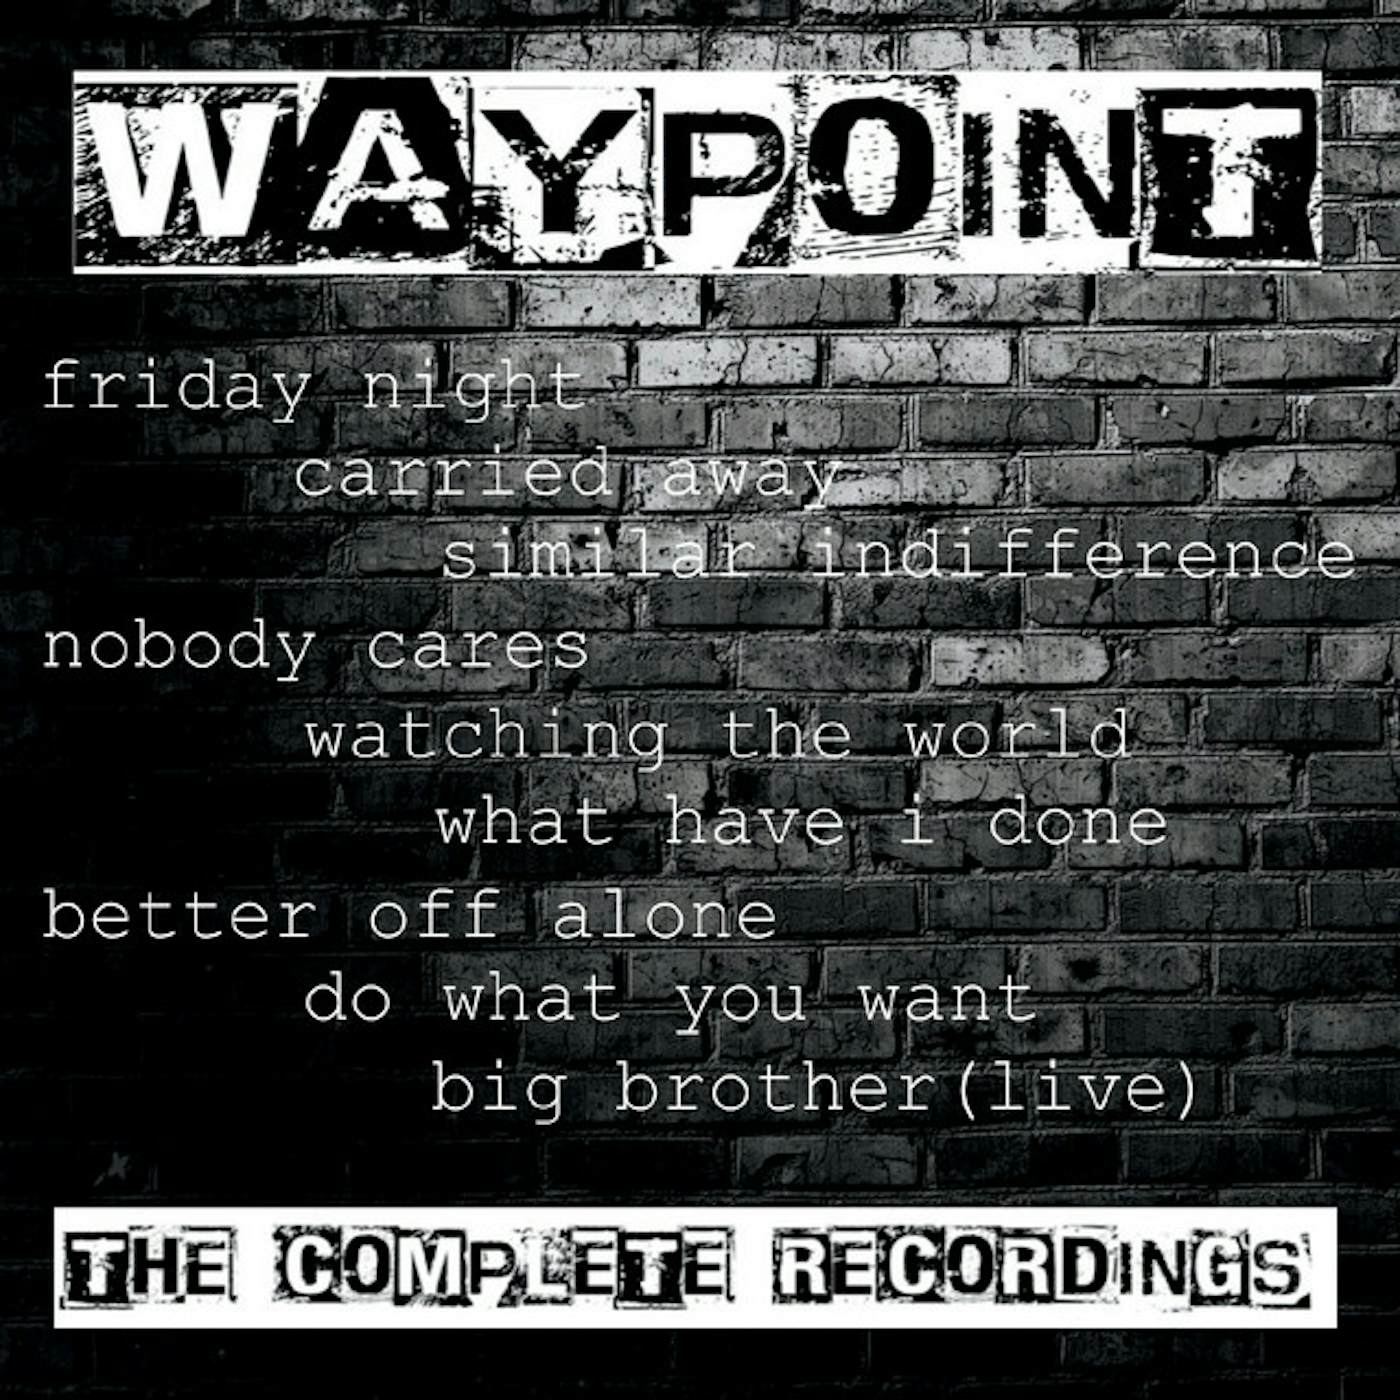 Waypoint COMPLETE RECORDINGS CD